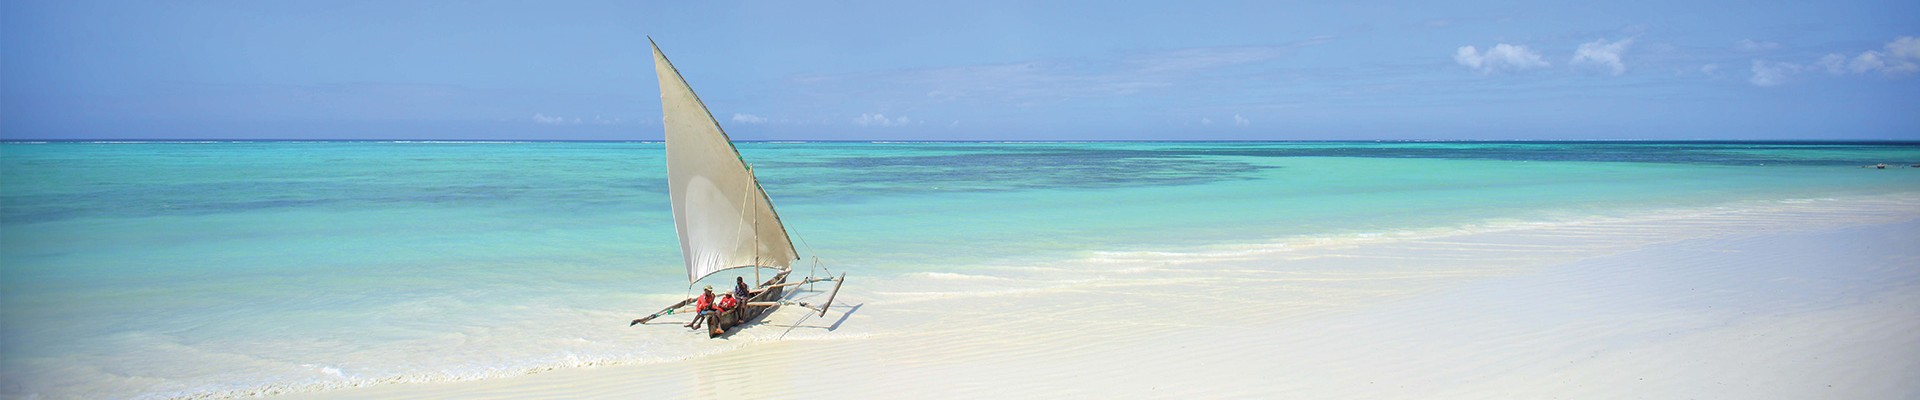 5* Bluebay Beach Resort & Spa - Zanzibar Package (5 Nights)